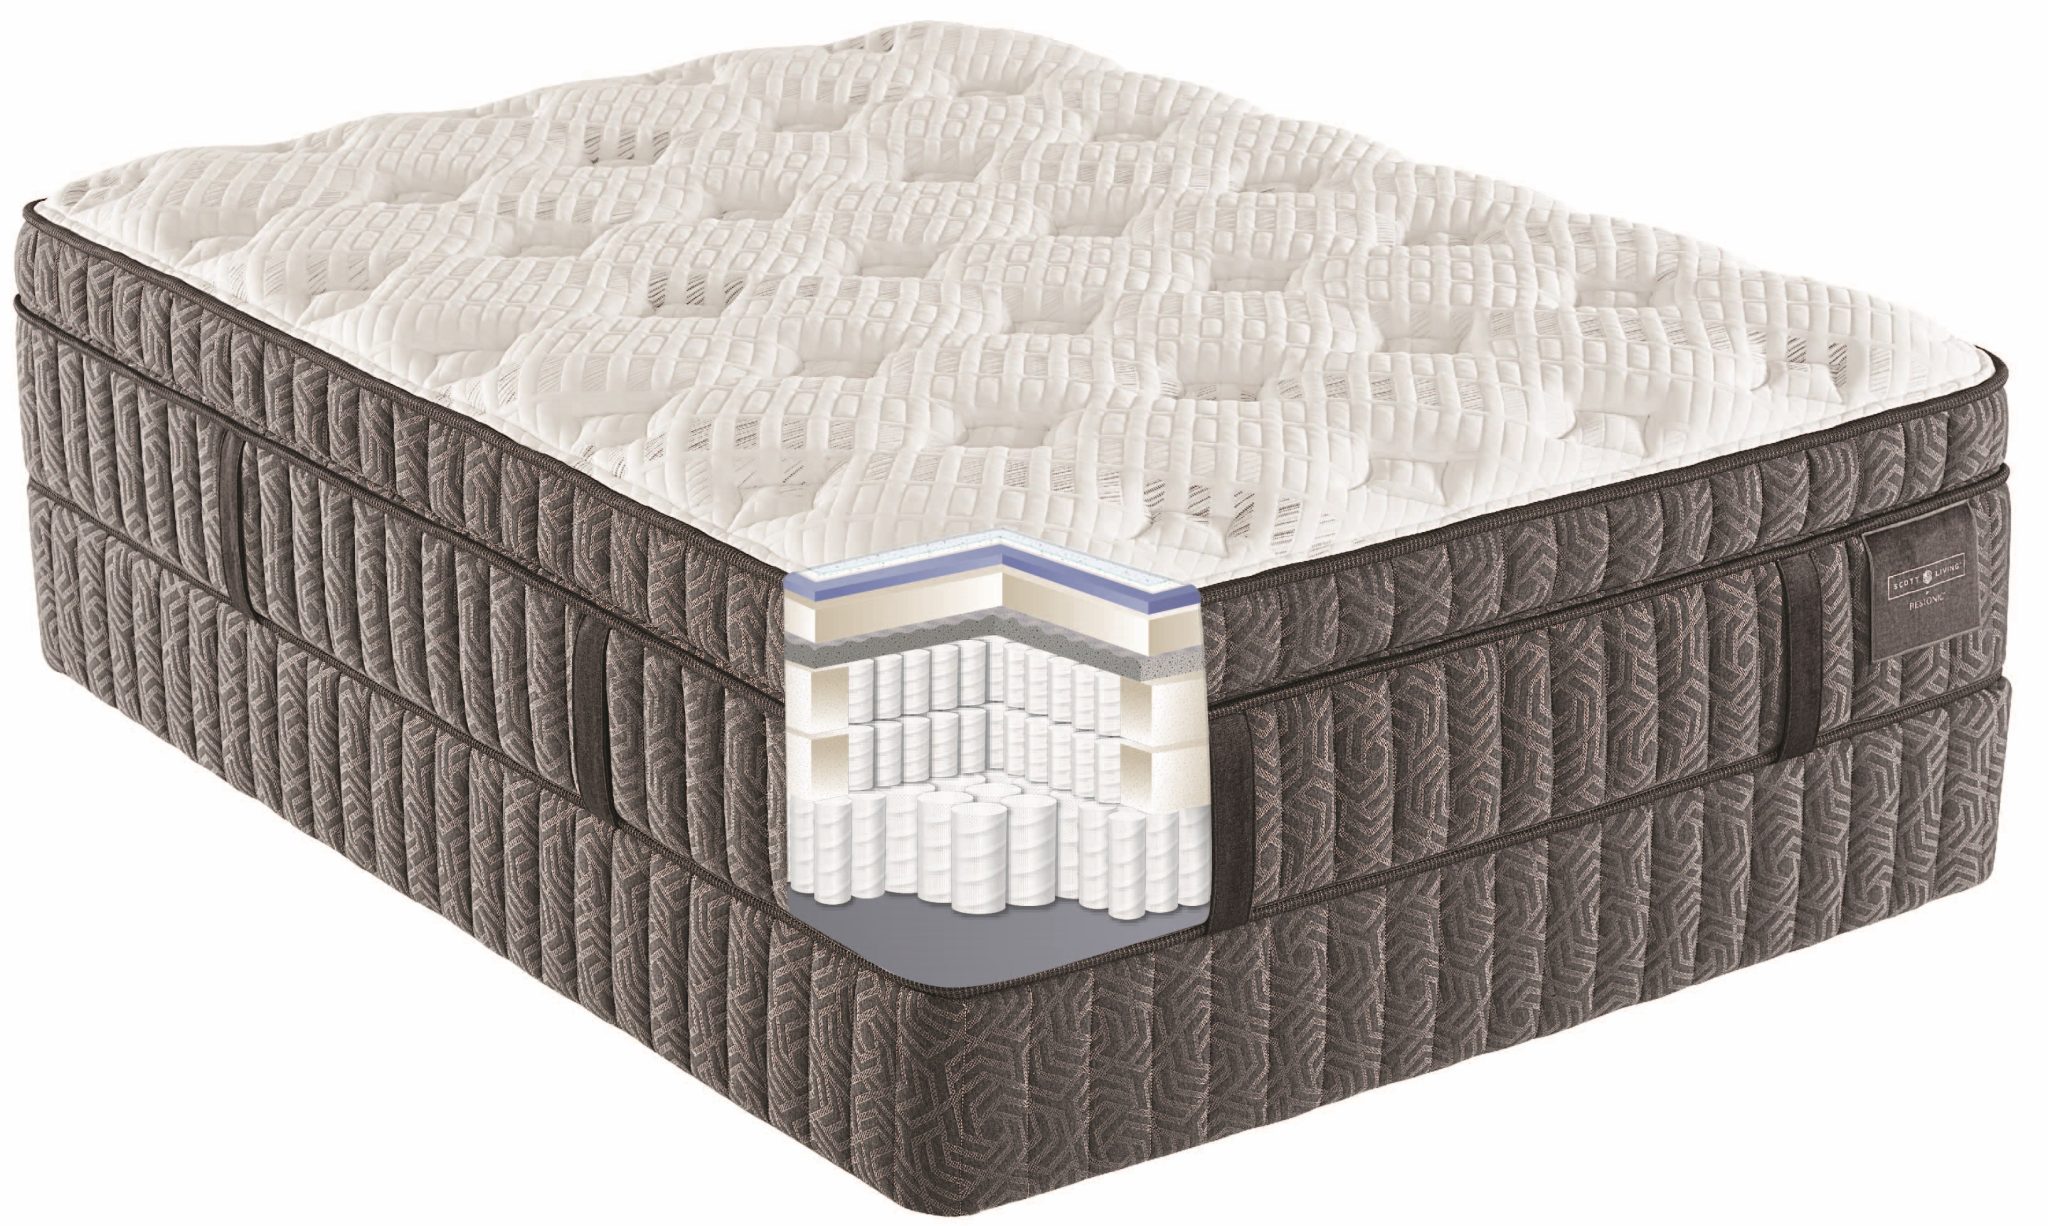 contura latex mattress review